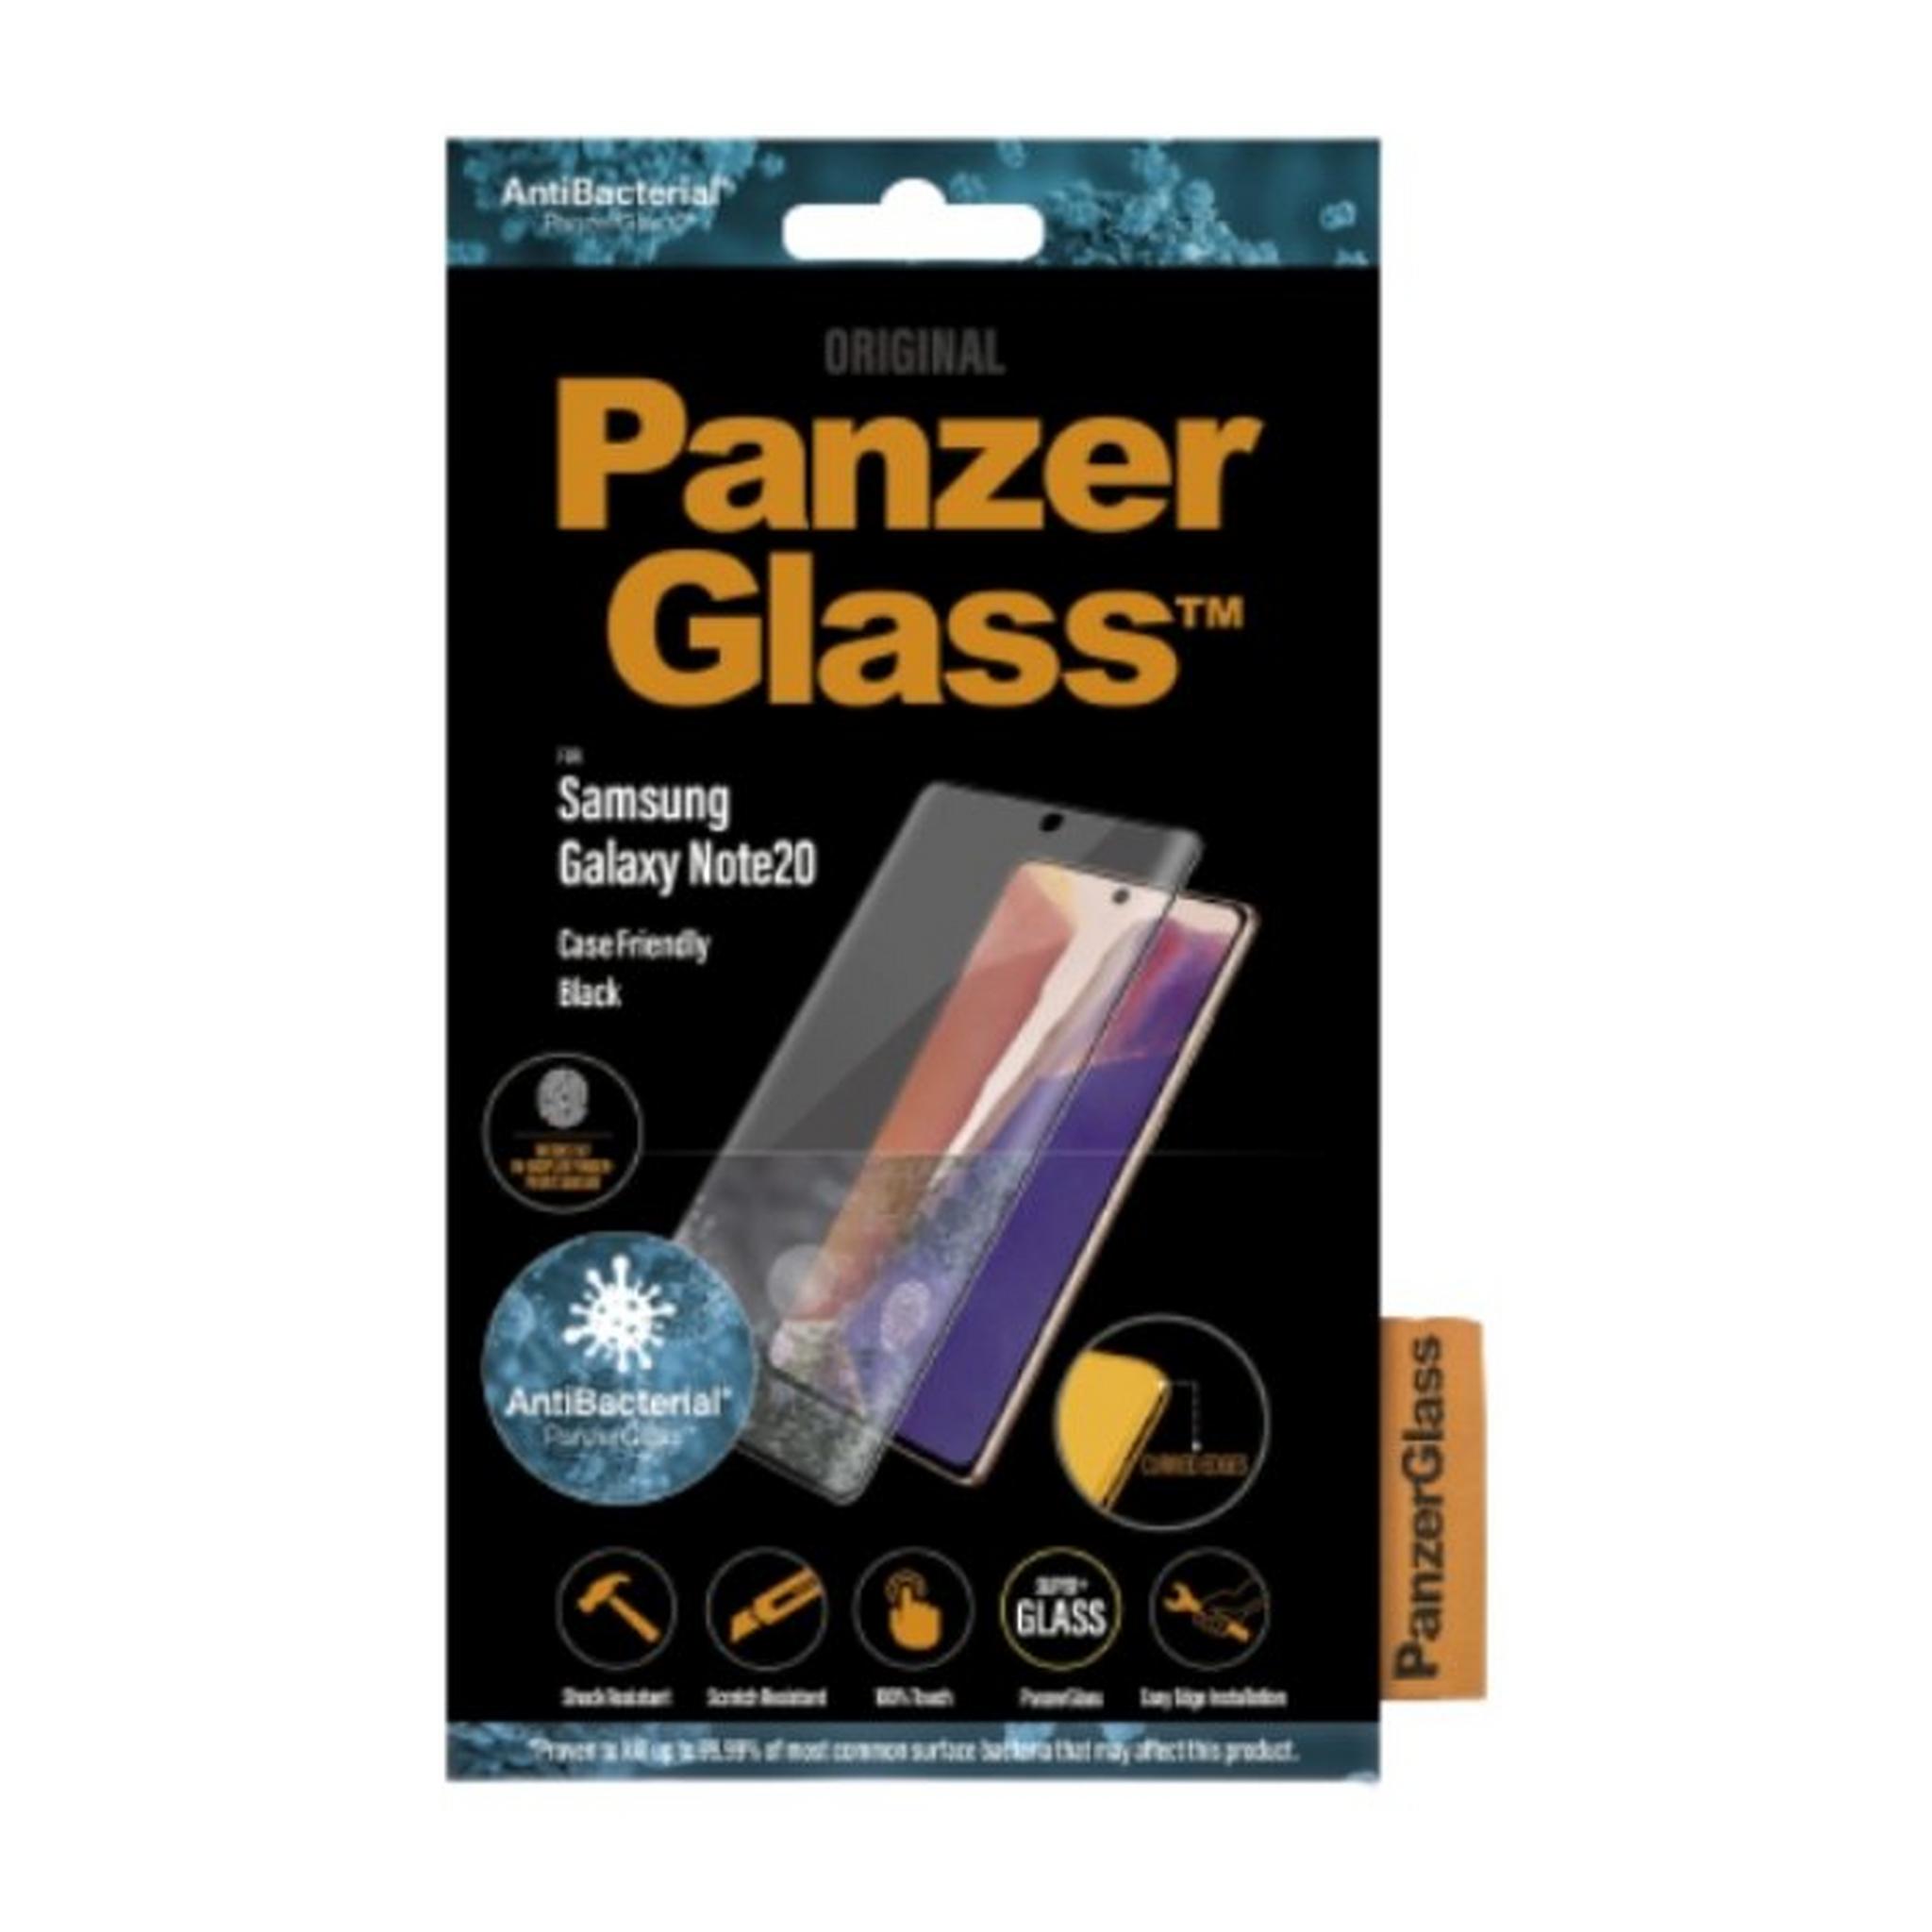 Panzer Glass Samsung Galaxy Note 20 Screen Protector - Black